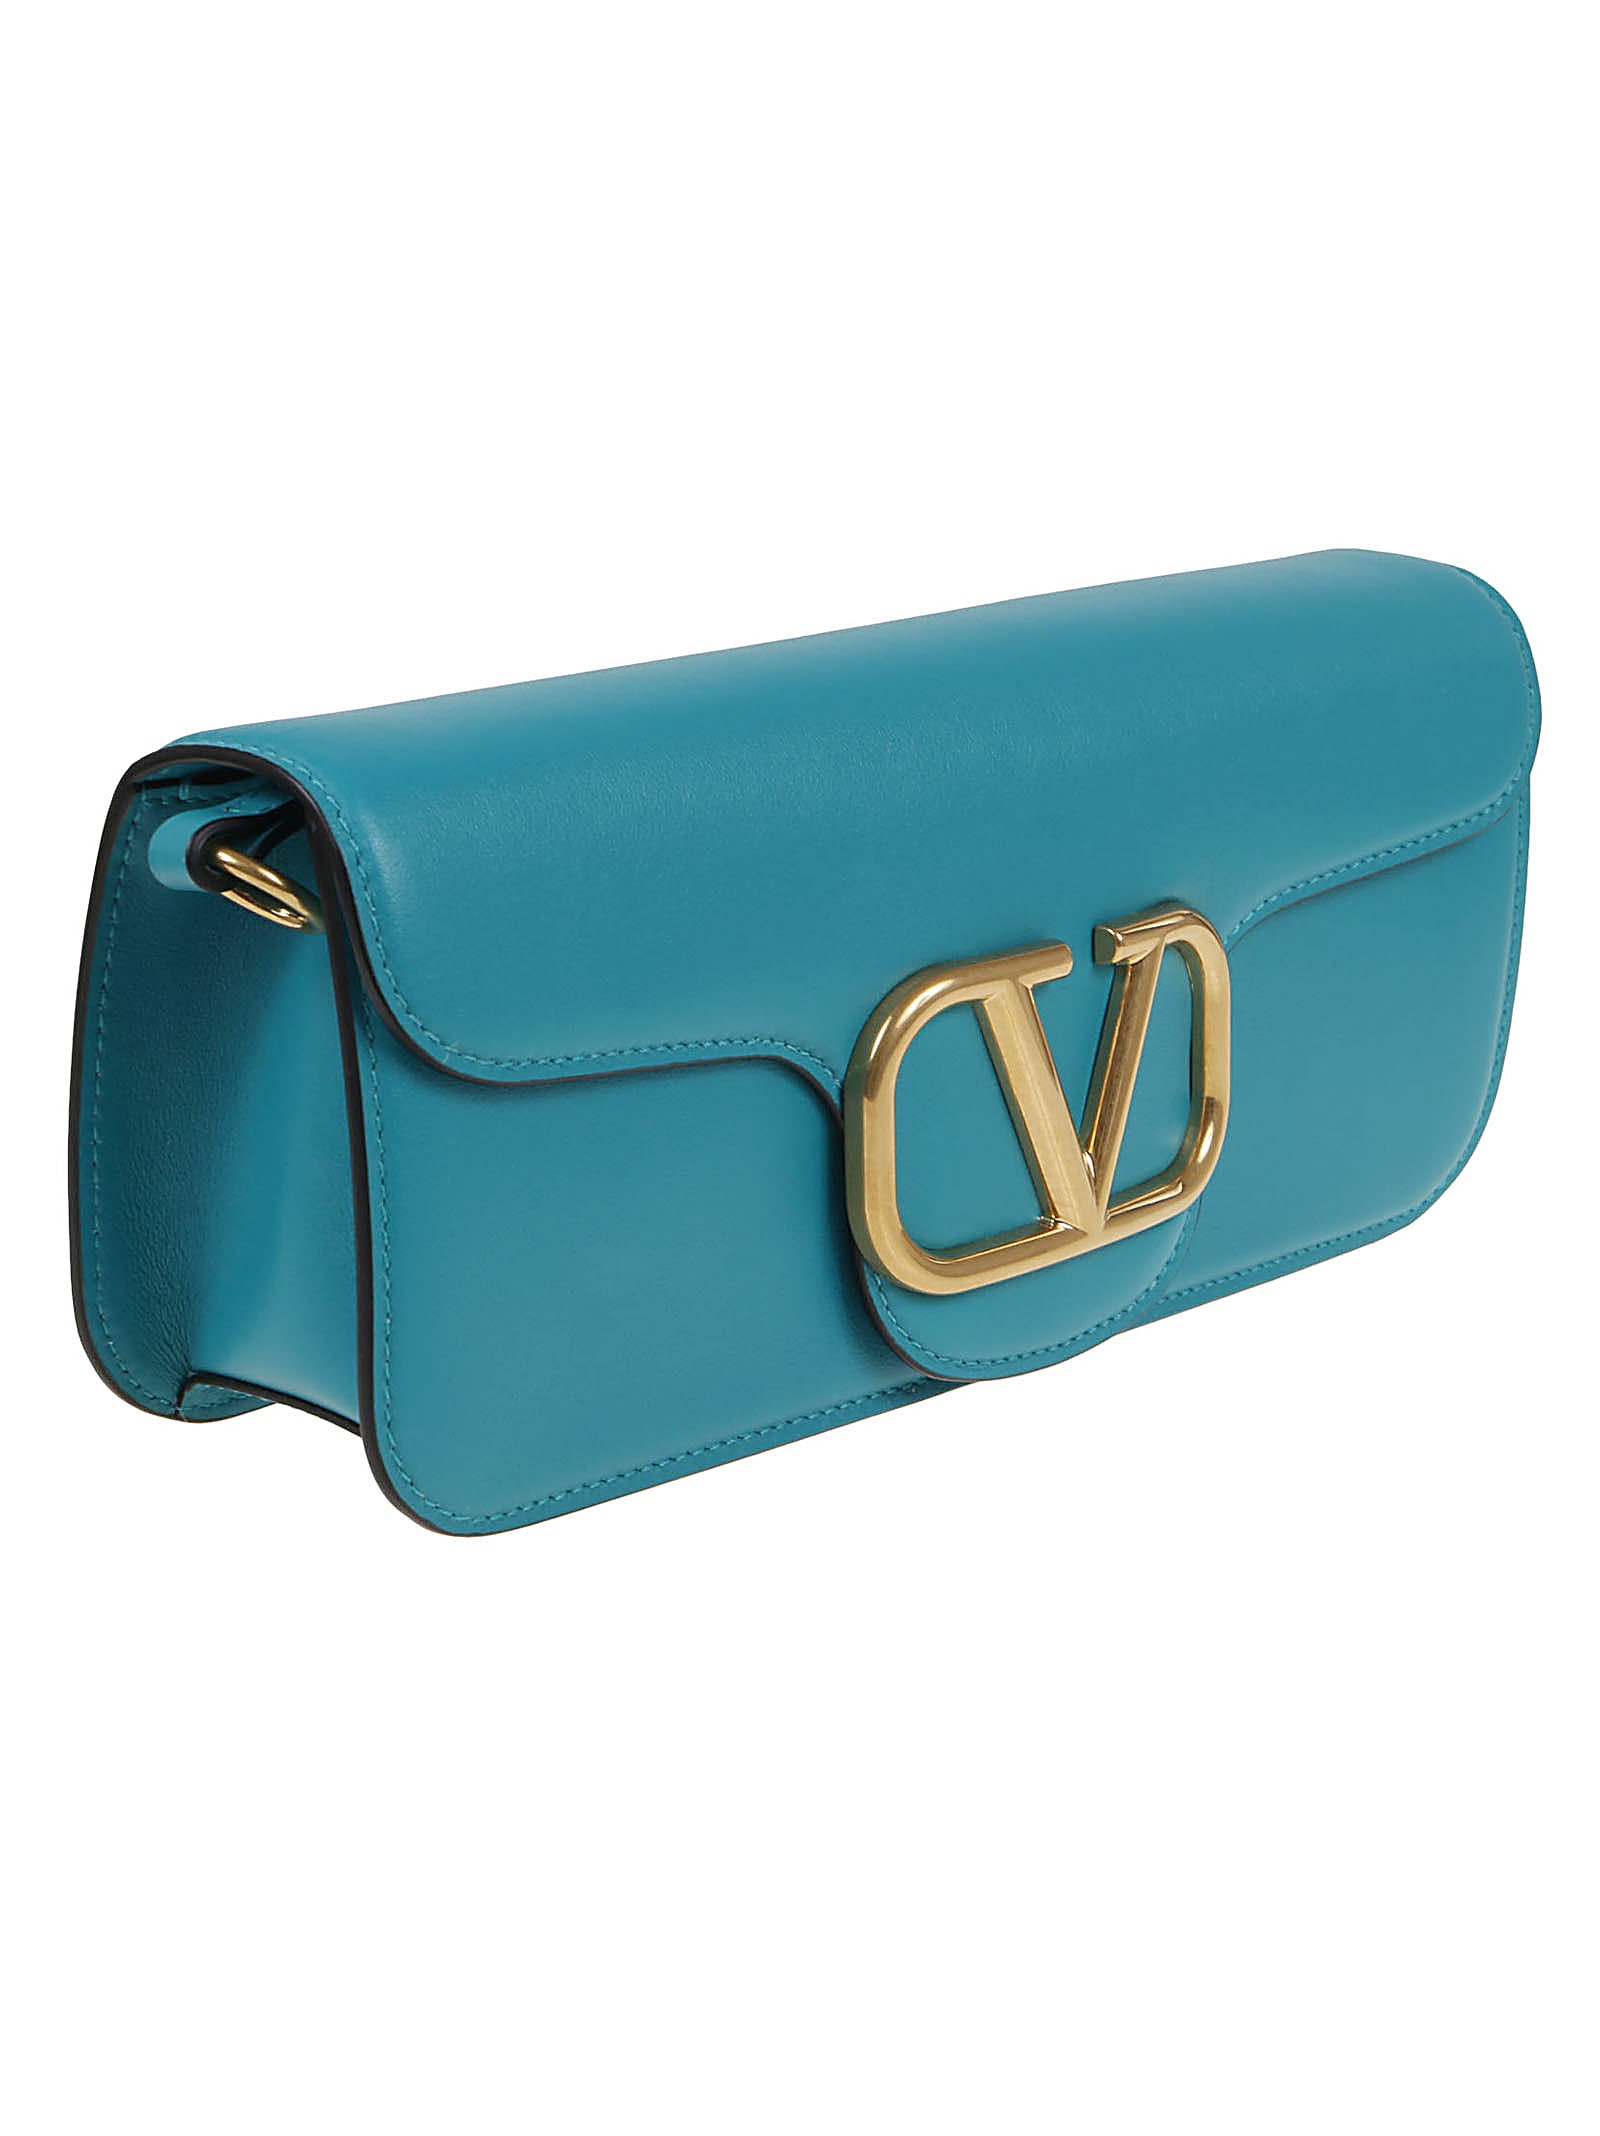 Valentino Garavani Loco Shoulder Bag in Ultramarine Green